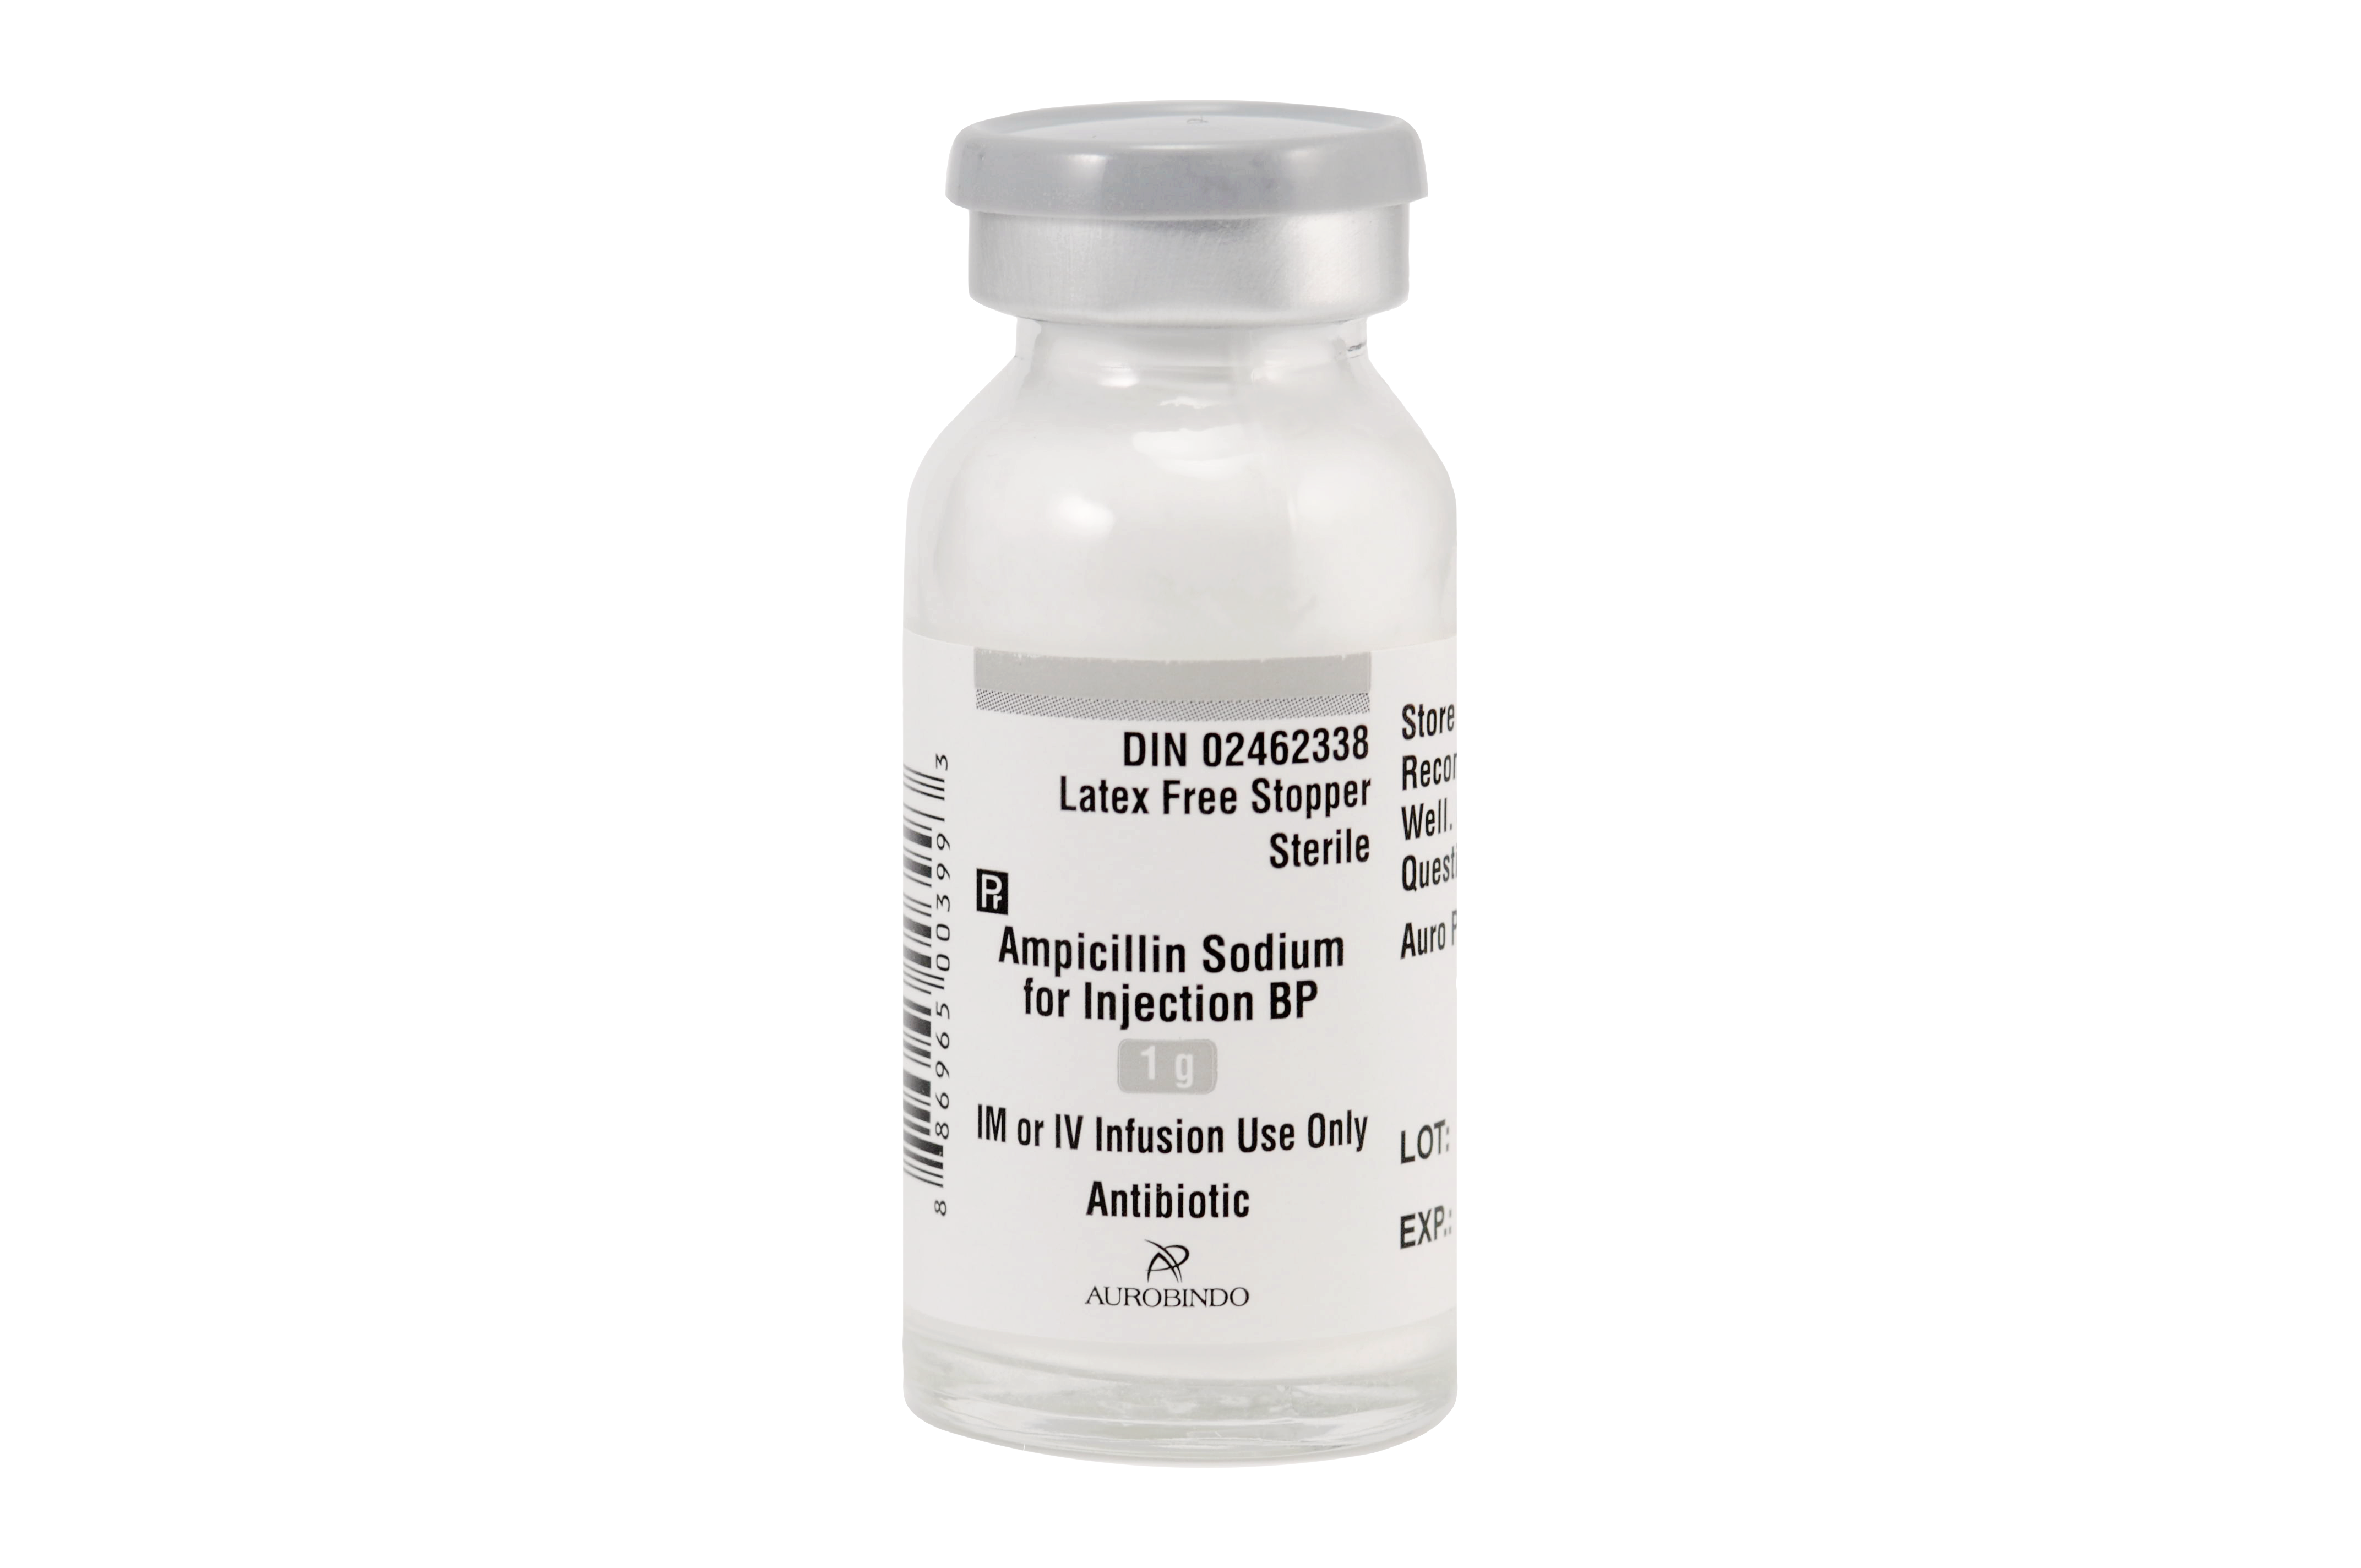 Ampicillin Sodium for Injection BP 1g, 15mL Vial